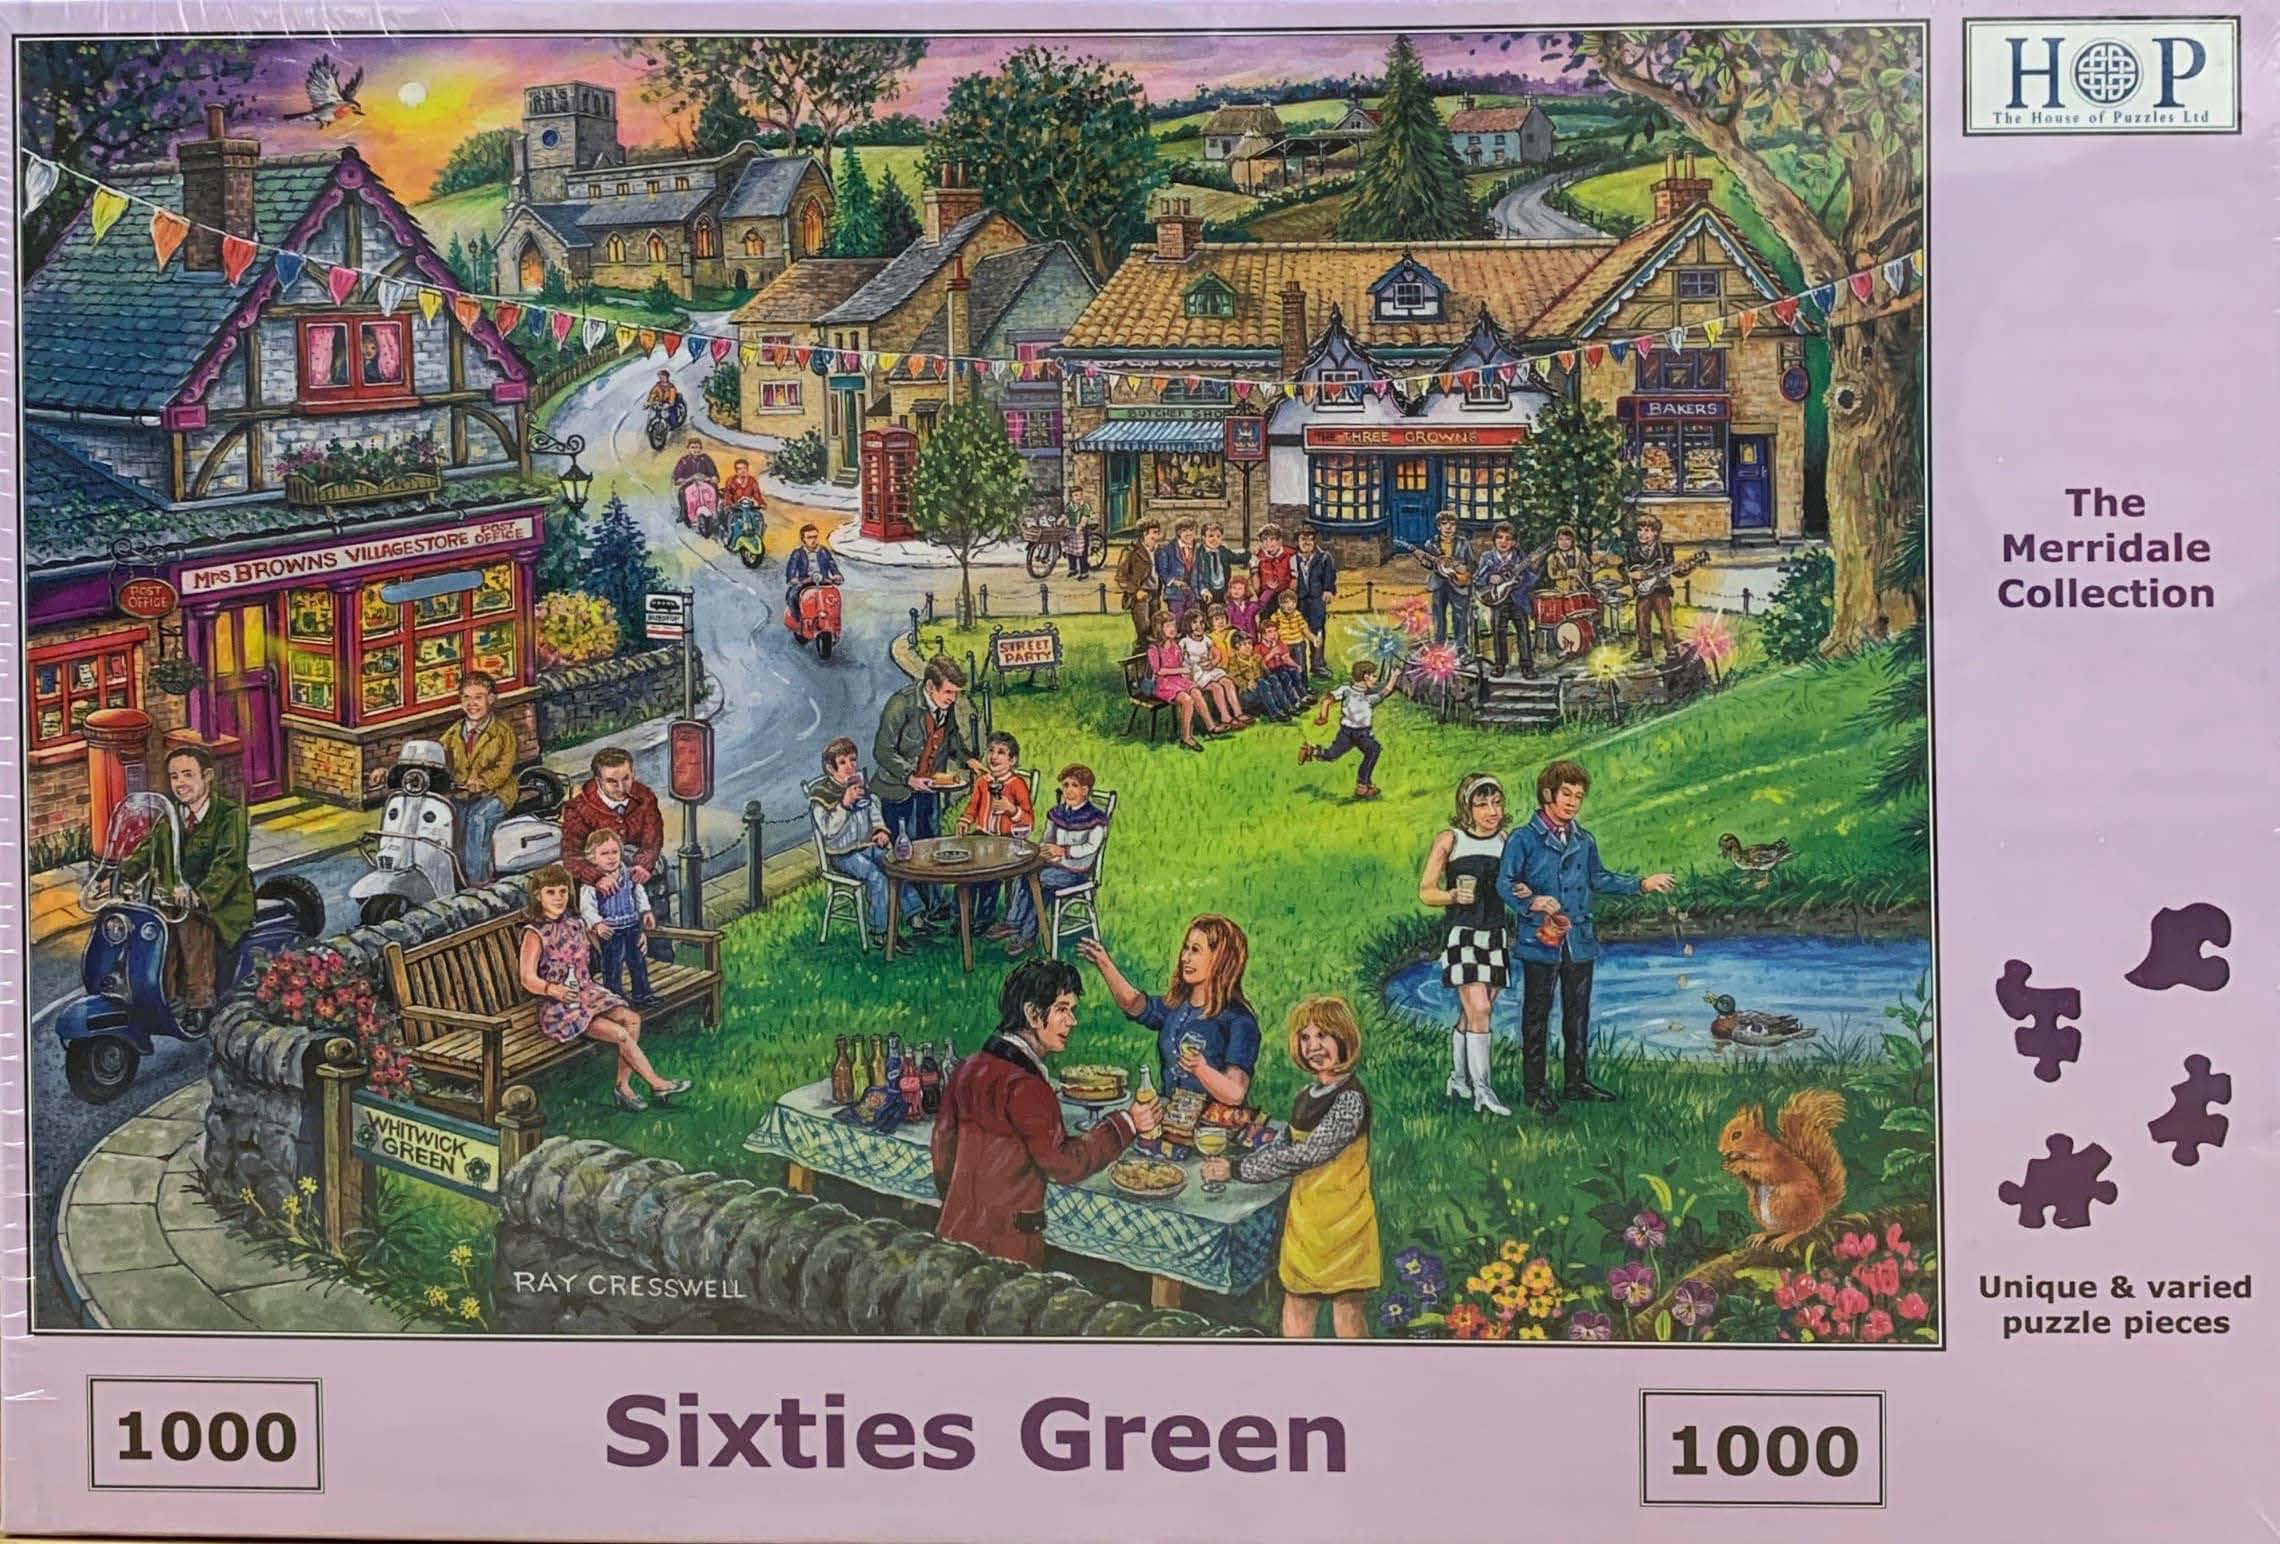 Sixties Green